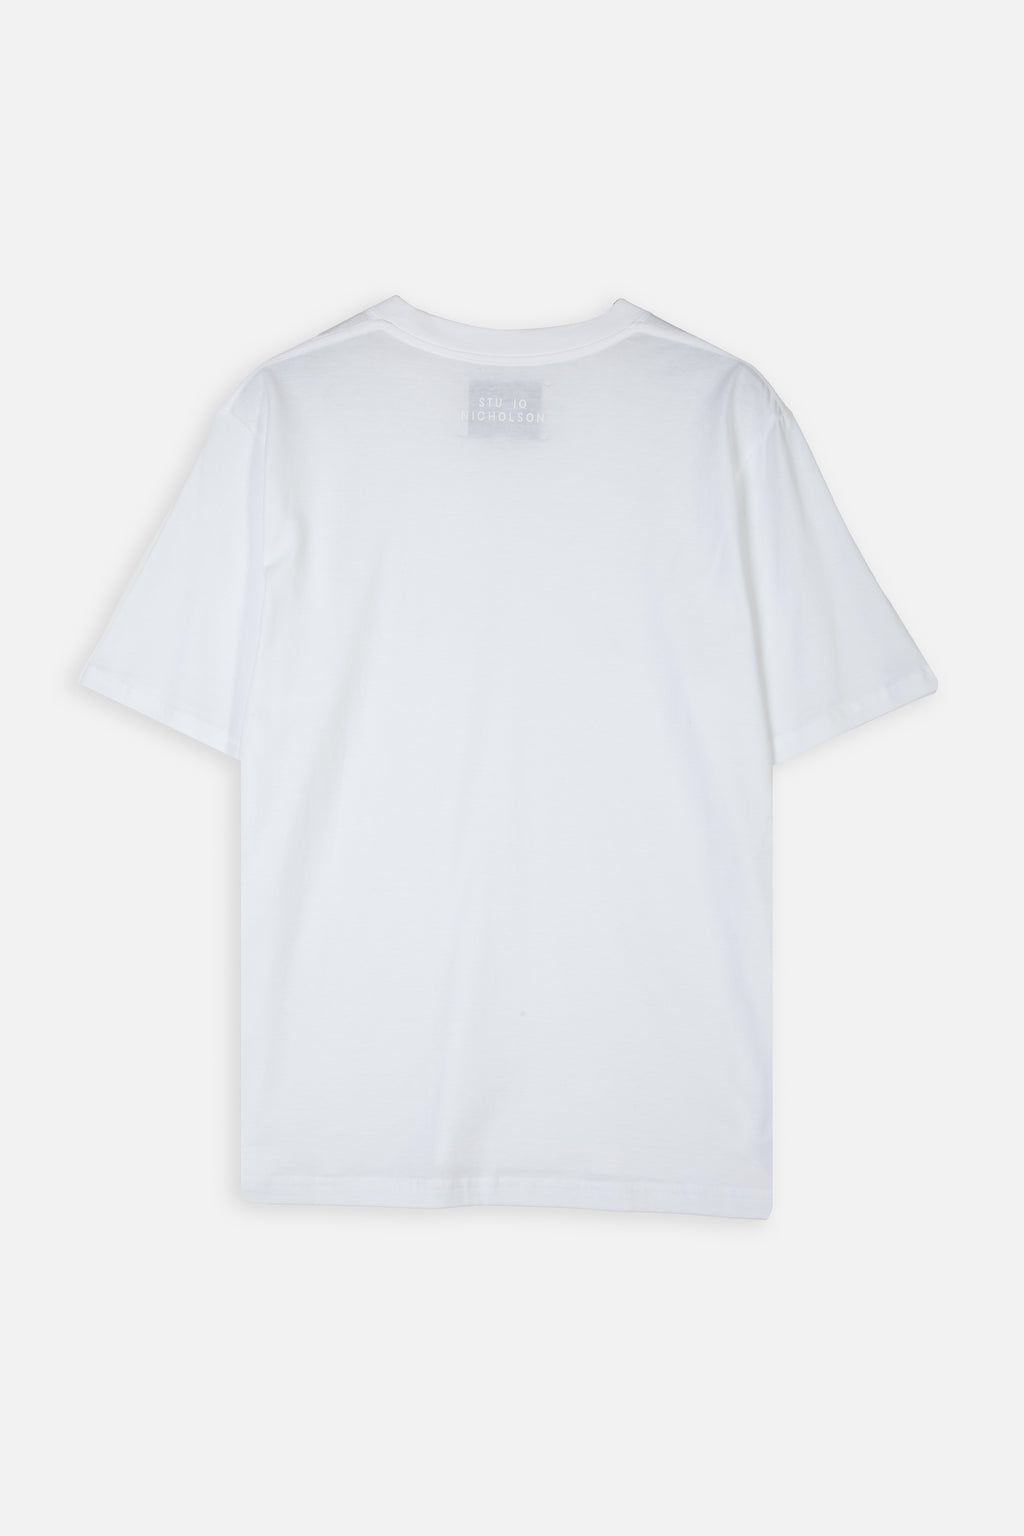 alt-image__White-cotton-regular-t-shirt---Bric